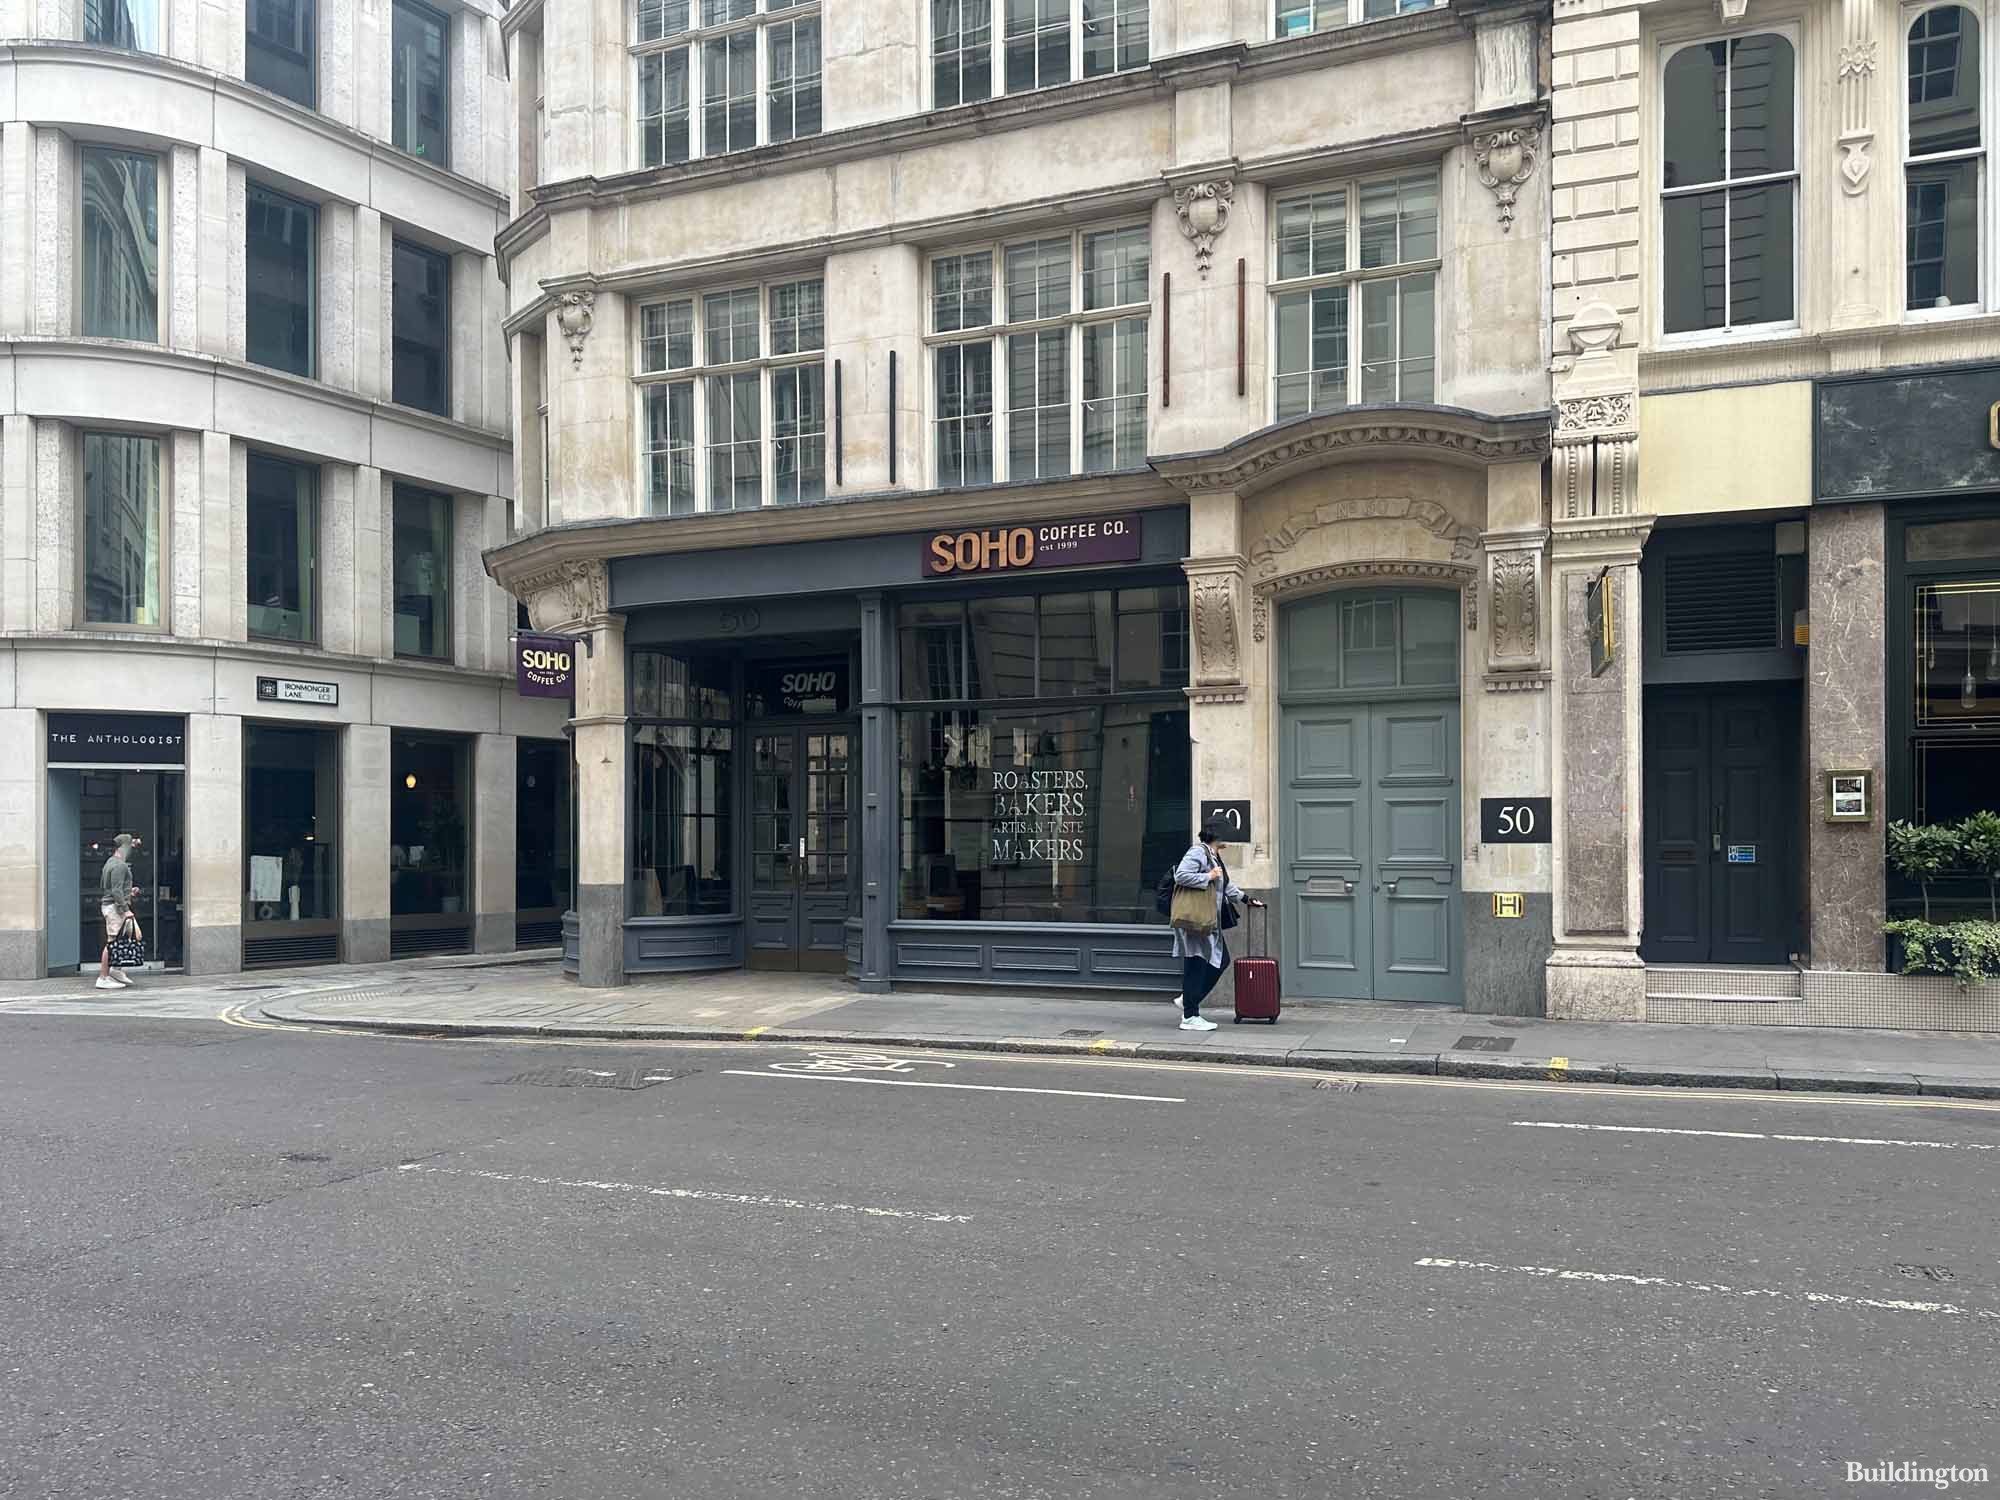 Soho Coffe Co at 50 Gresham Street building in the City of London EC2